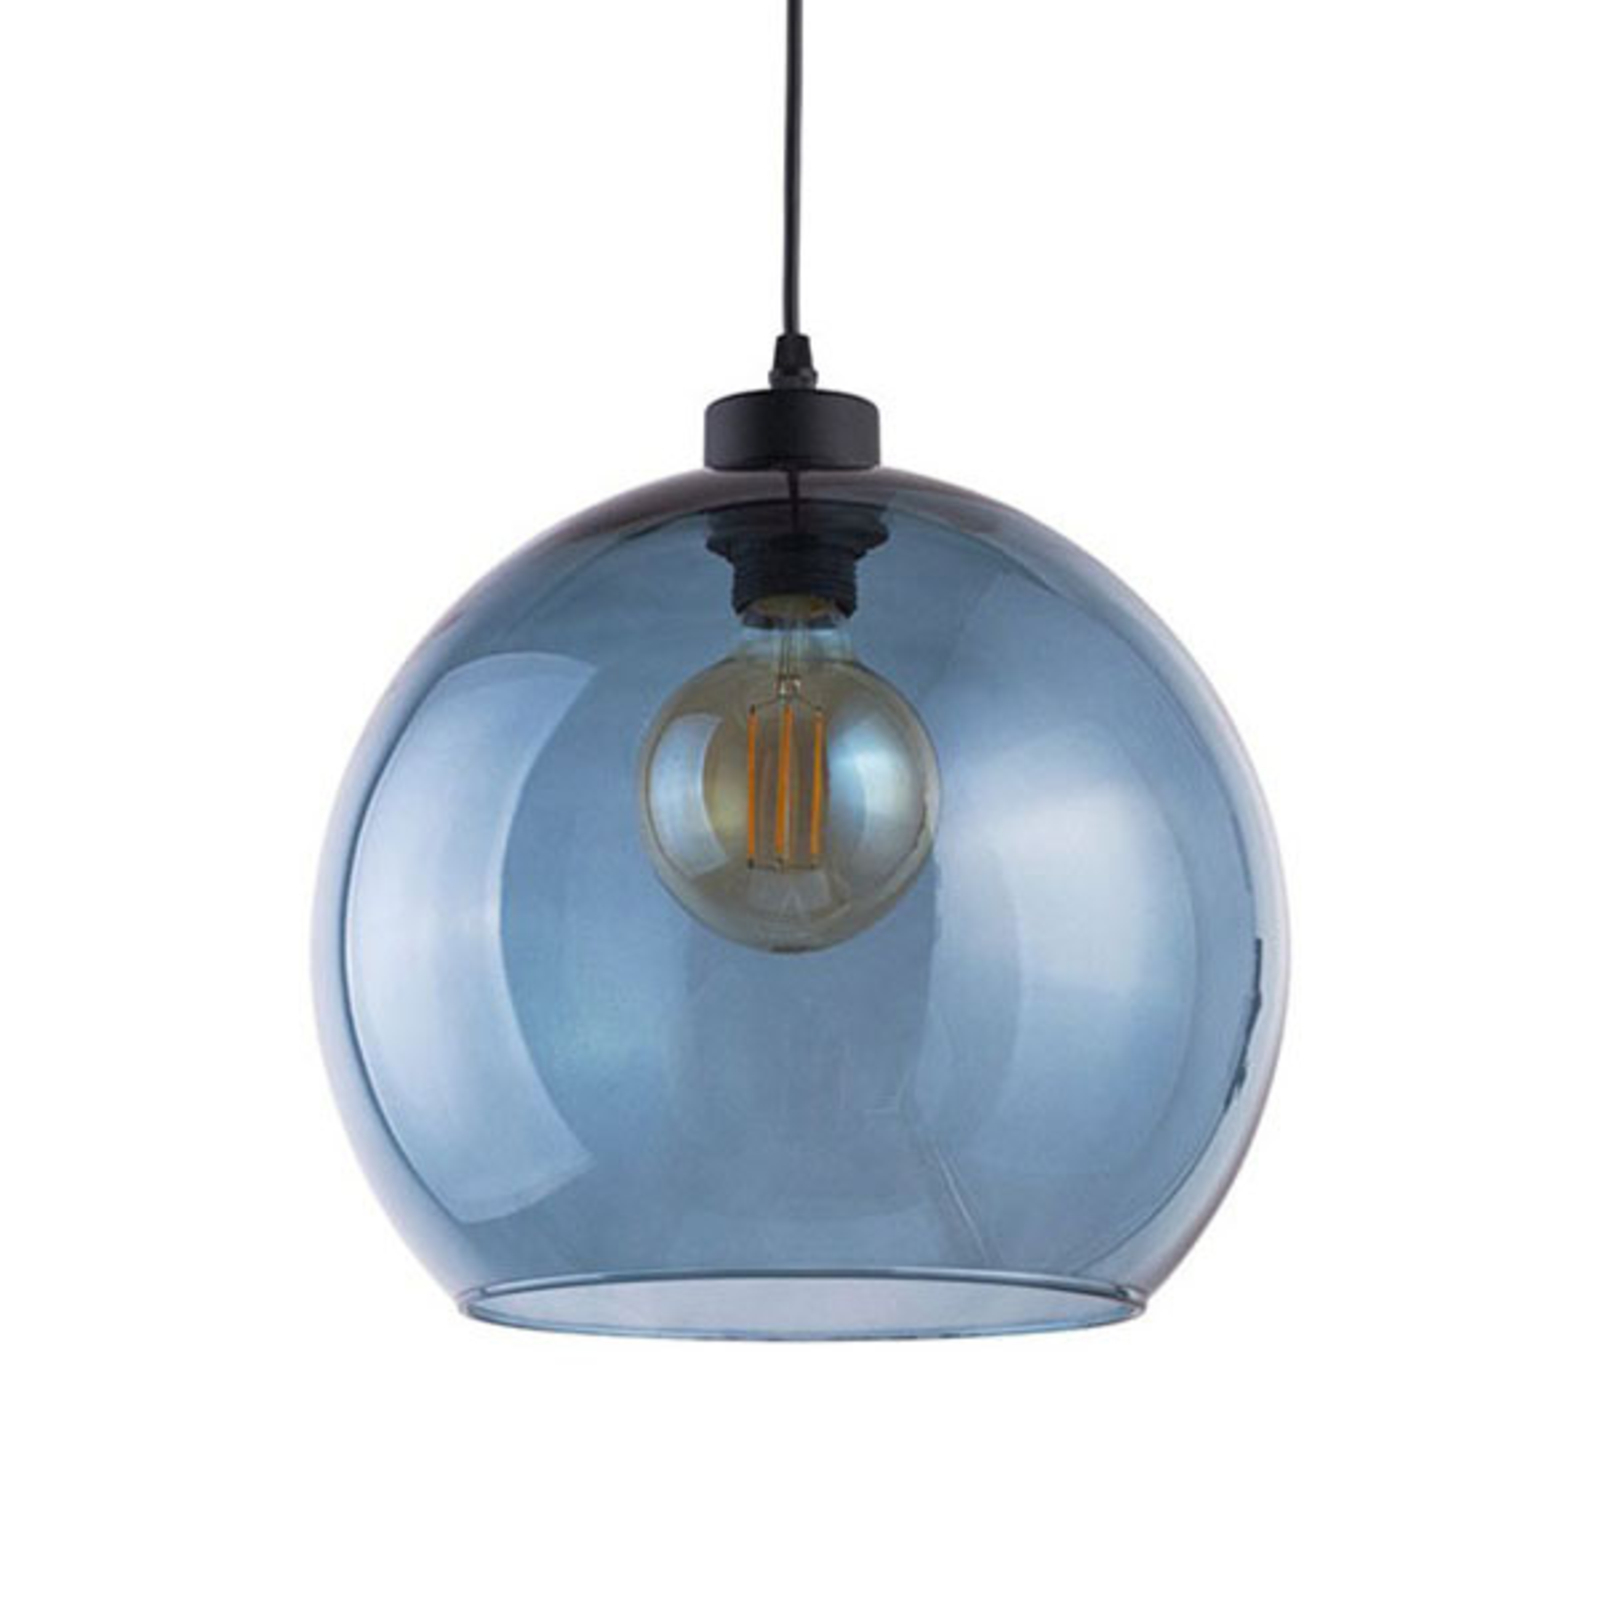 Hanglamp 1-lamp, blauw | Lampen24.be